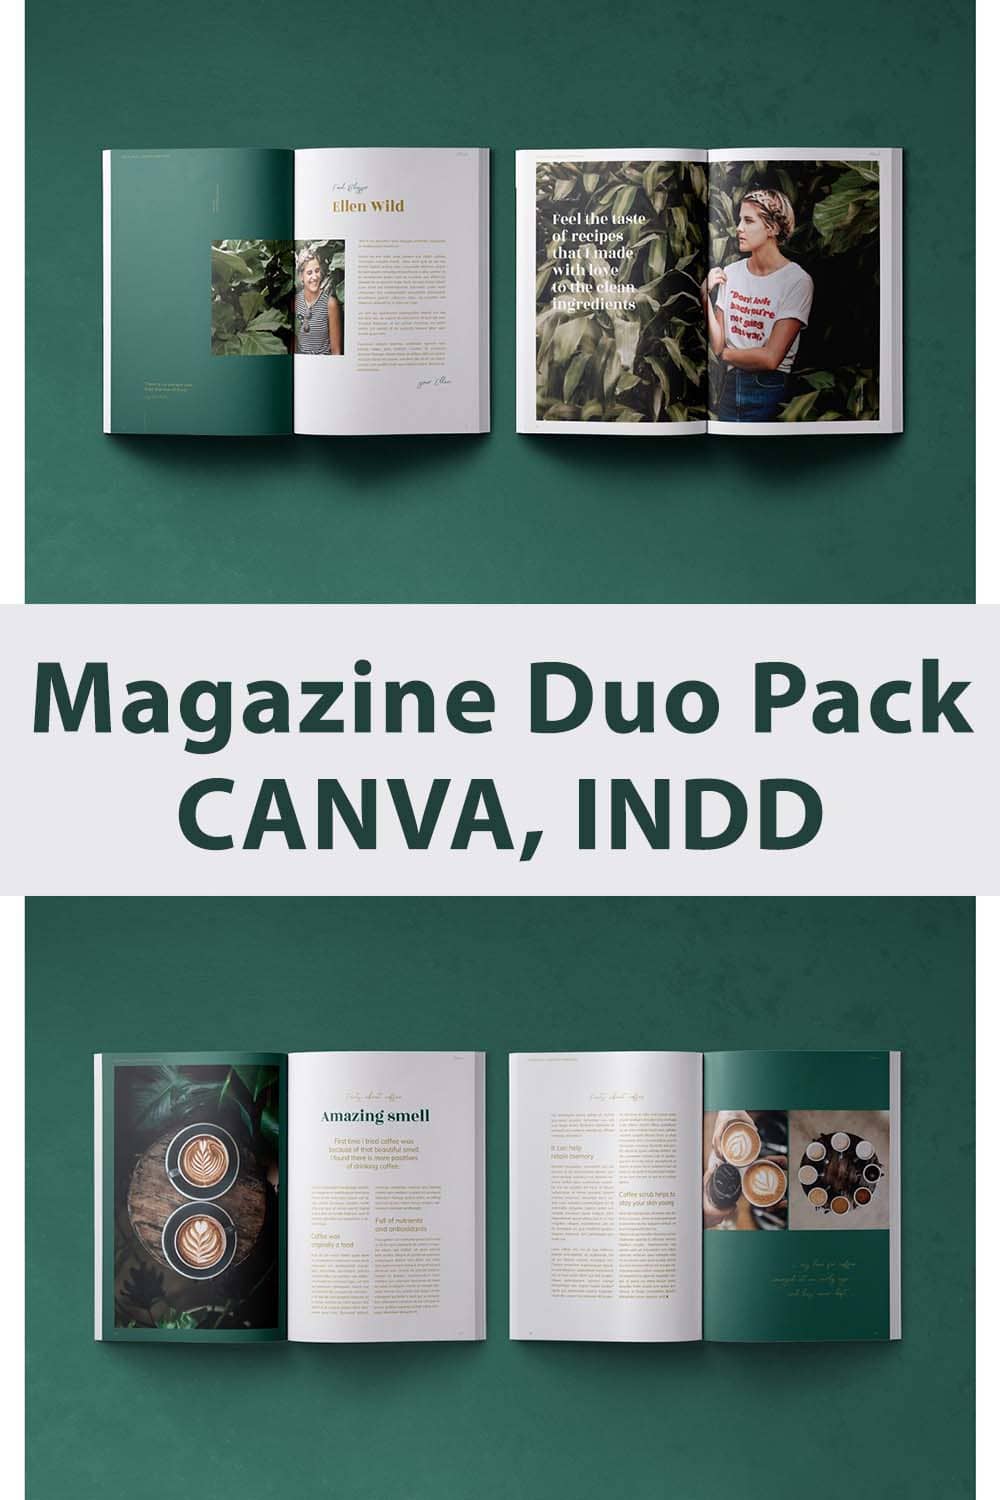 magazine duo pack canva indd pinterest image.